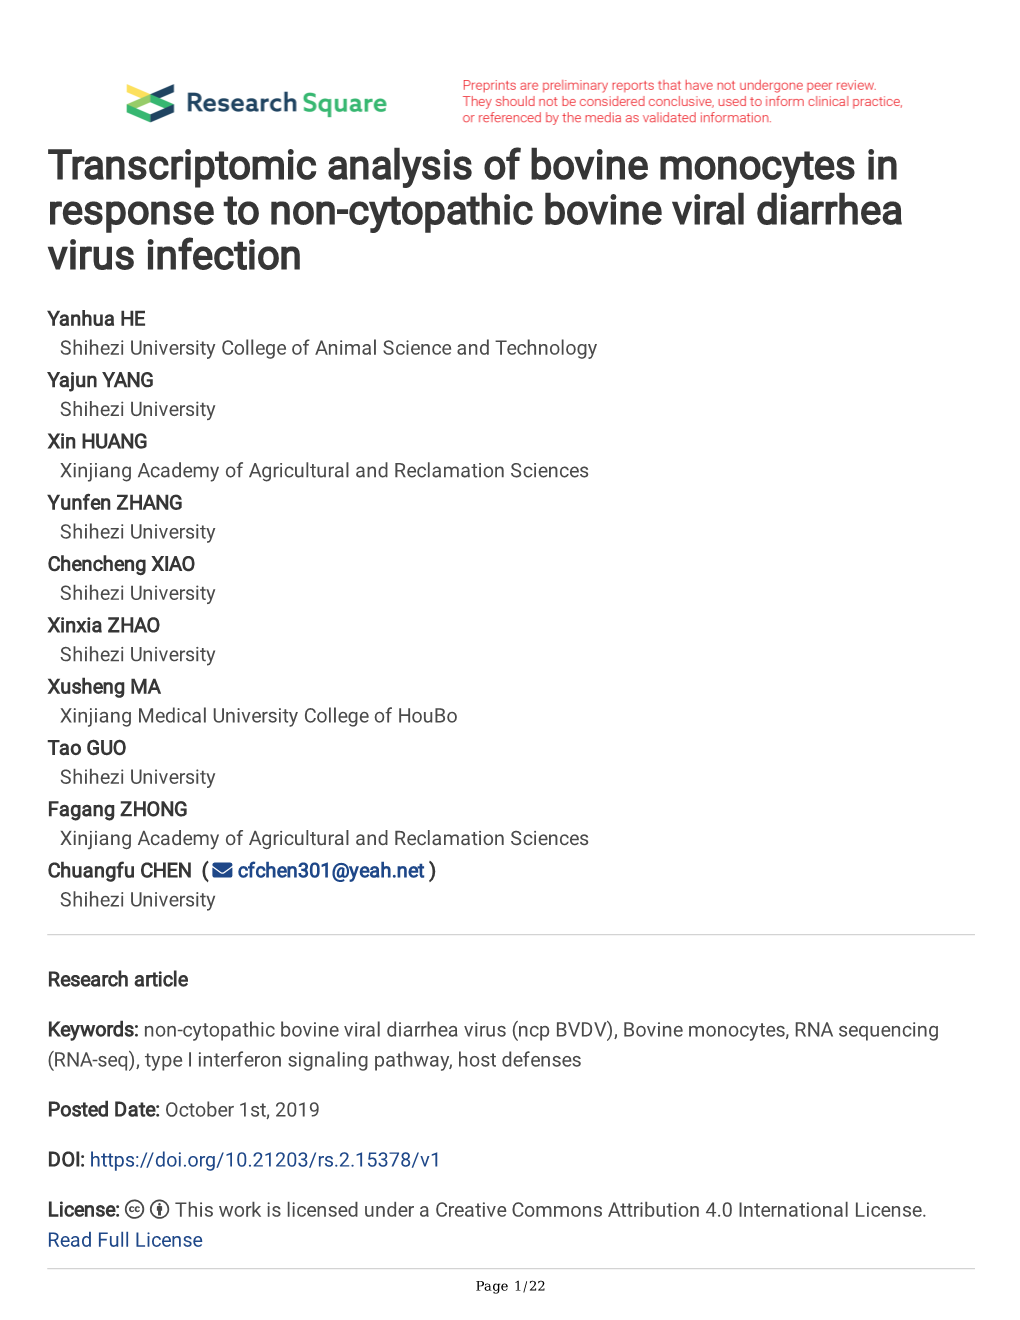 Transcriptomic Analysis of Bovine Monocytes in Response to Non-Cytopathic Bovine Viral Diarrhea Virus Infection